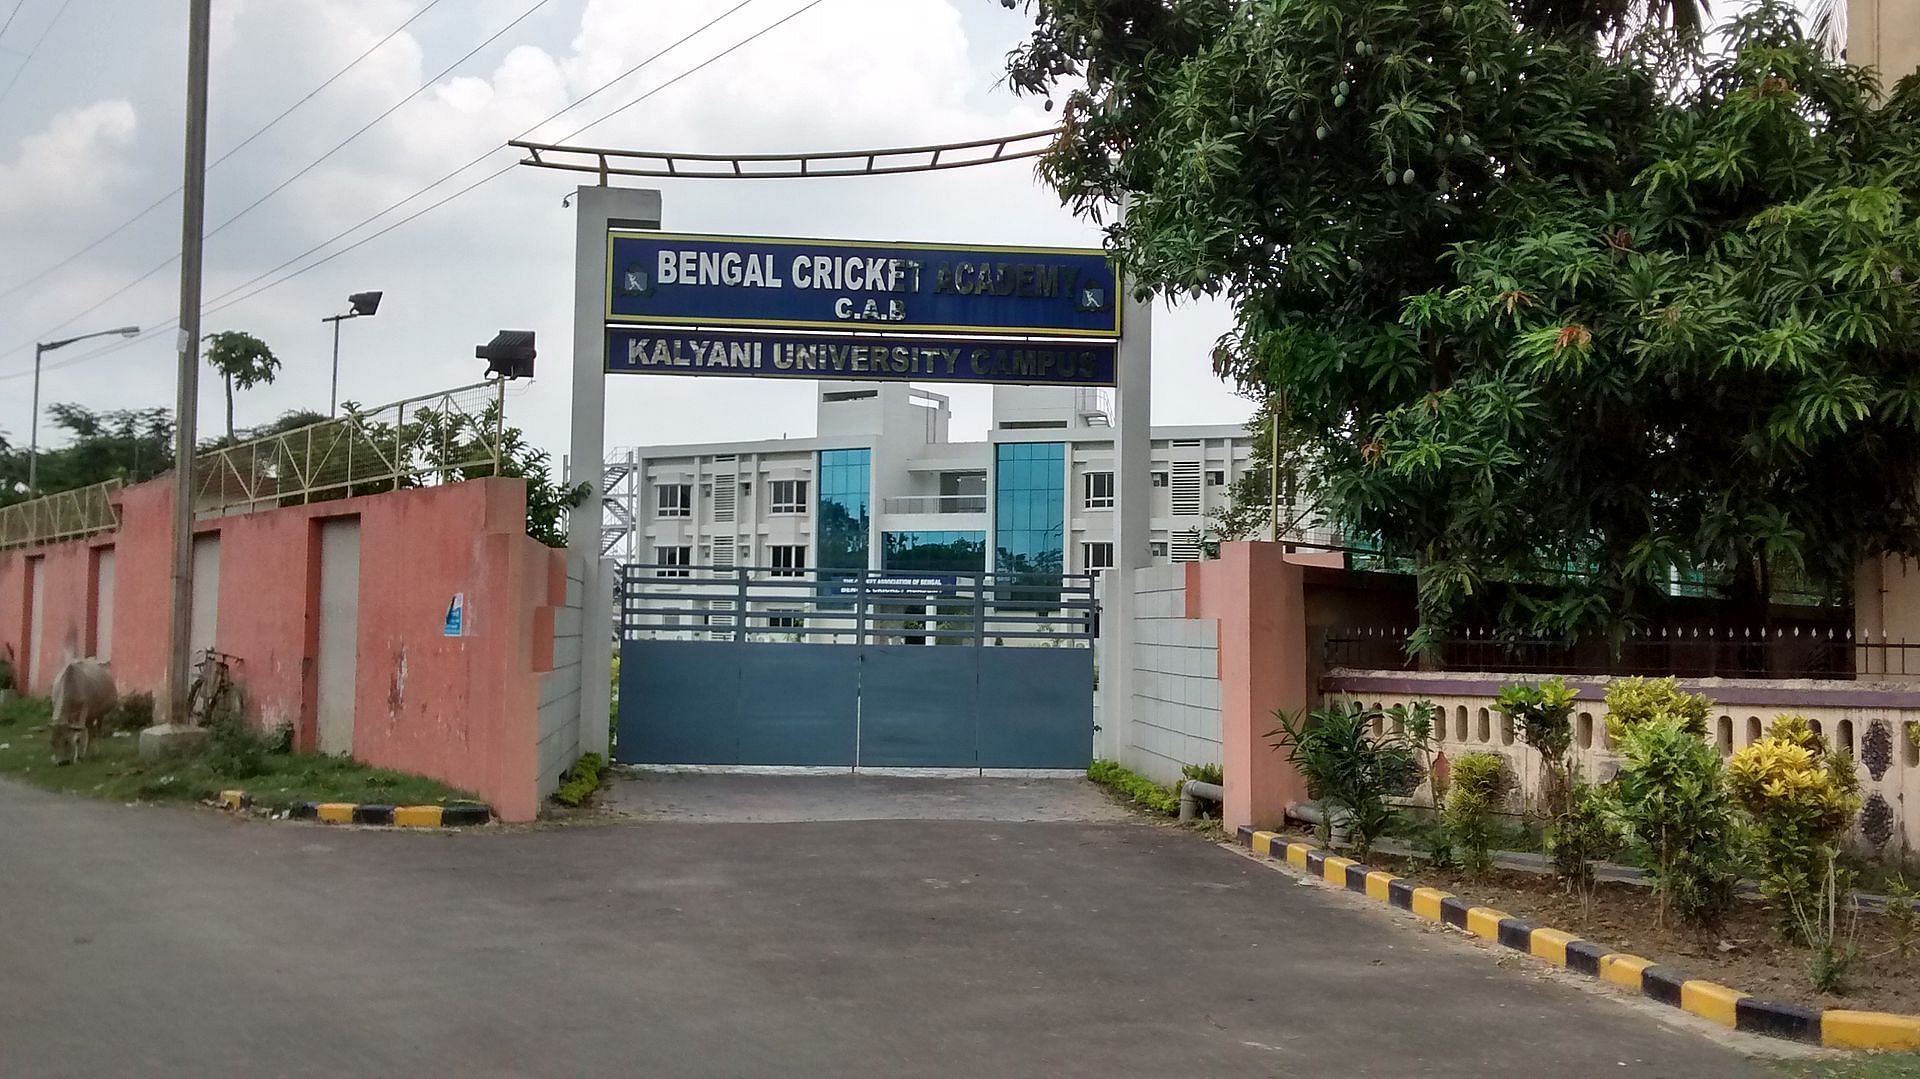 The BCA Cricket Academy (Source: Wikipedia)